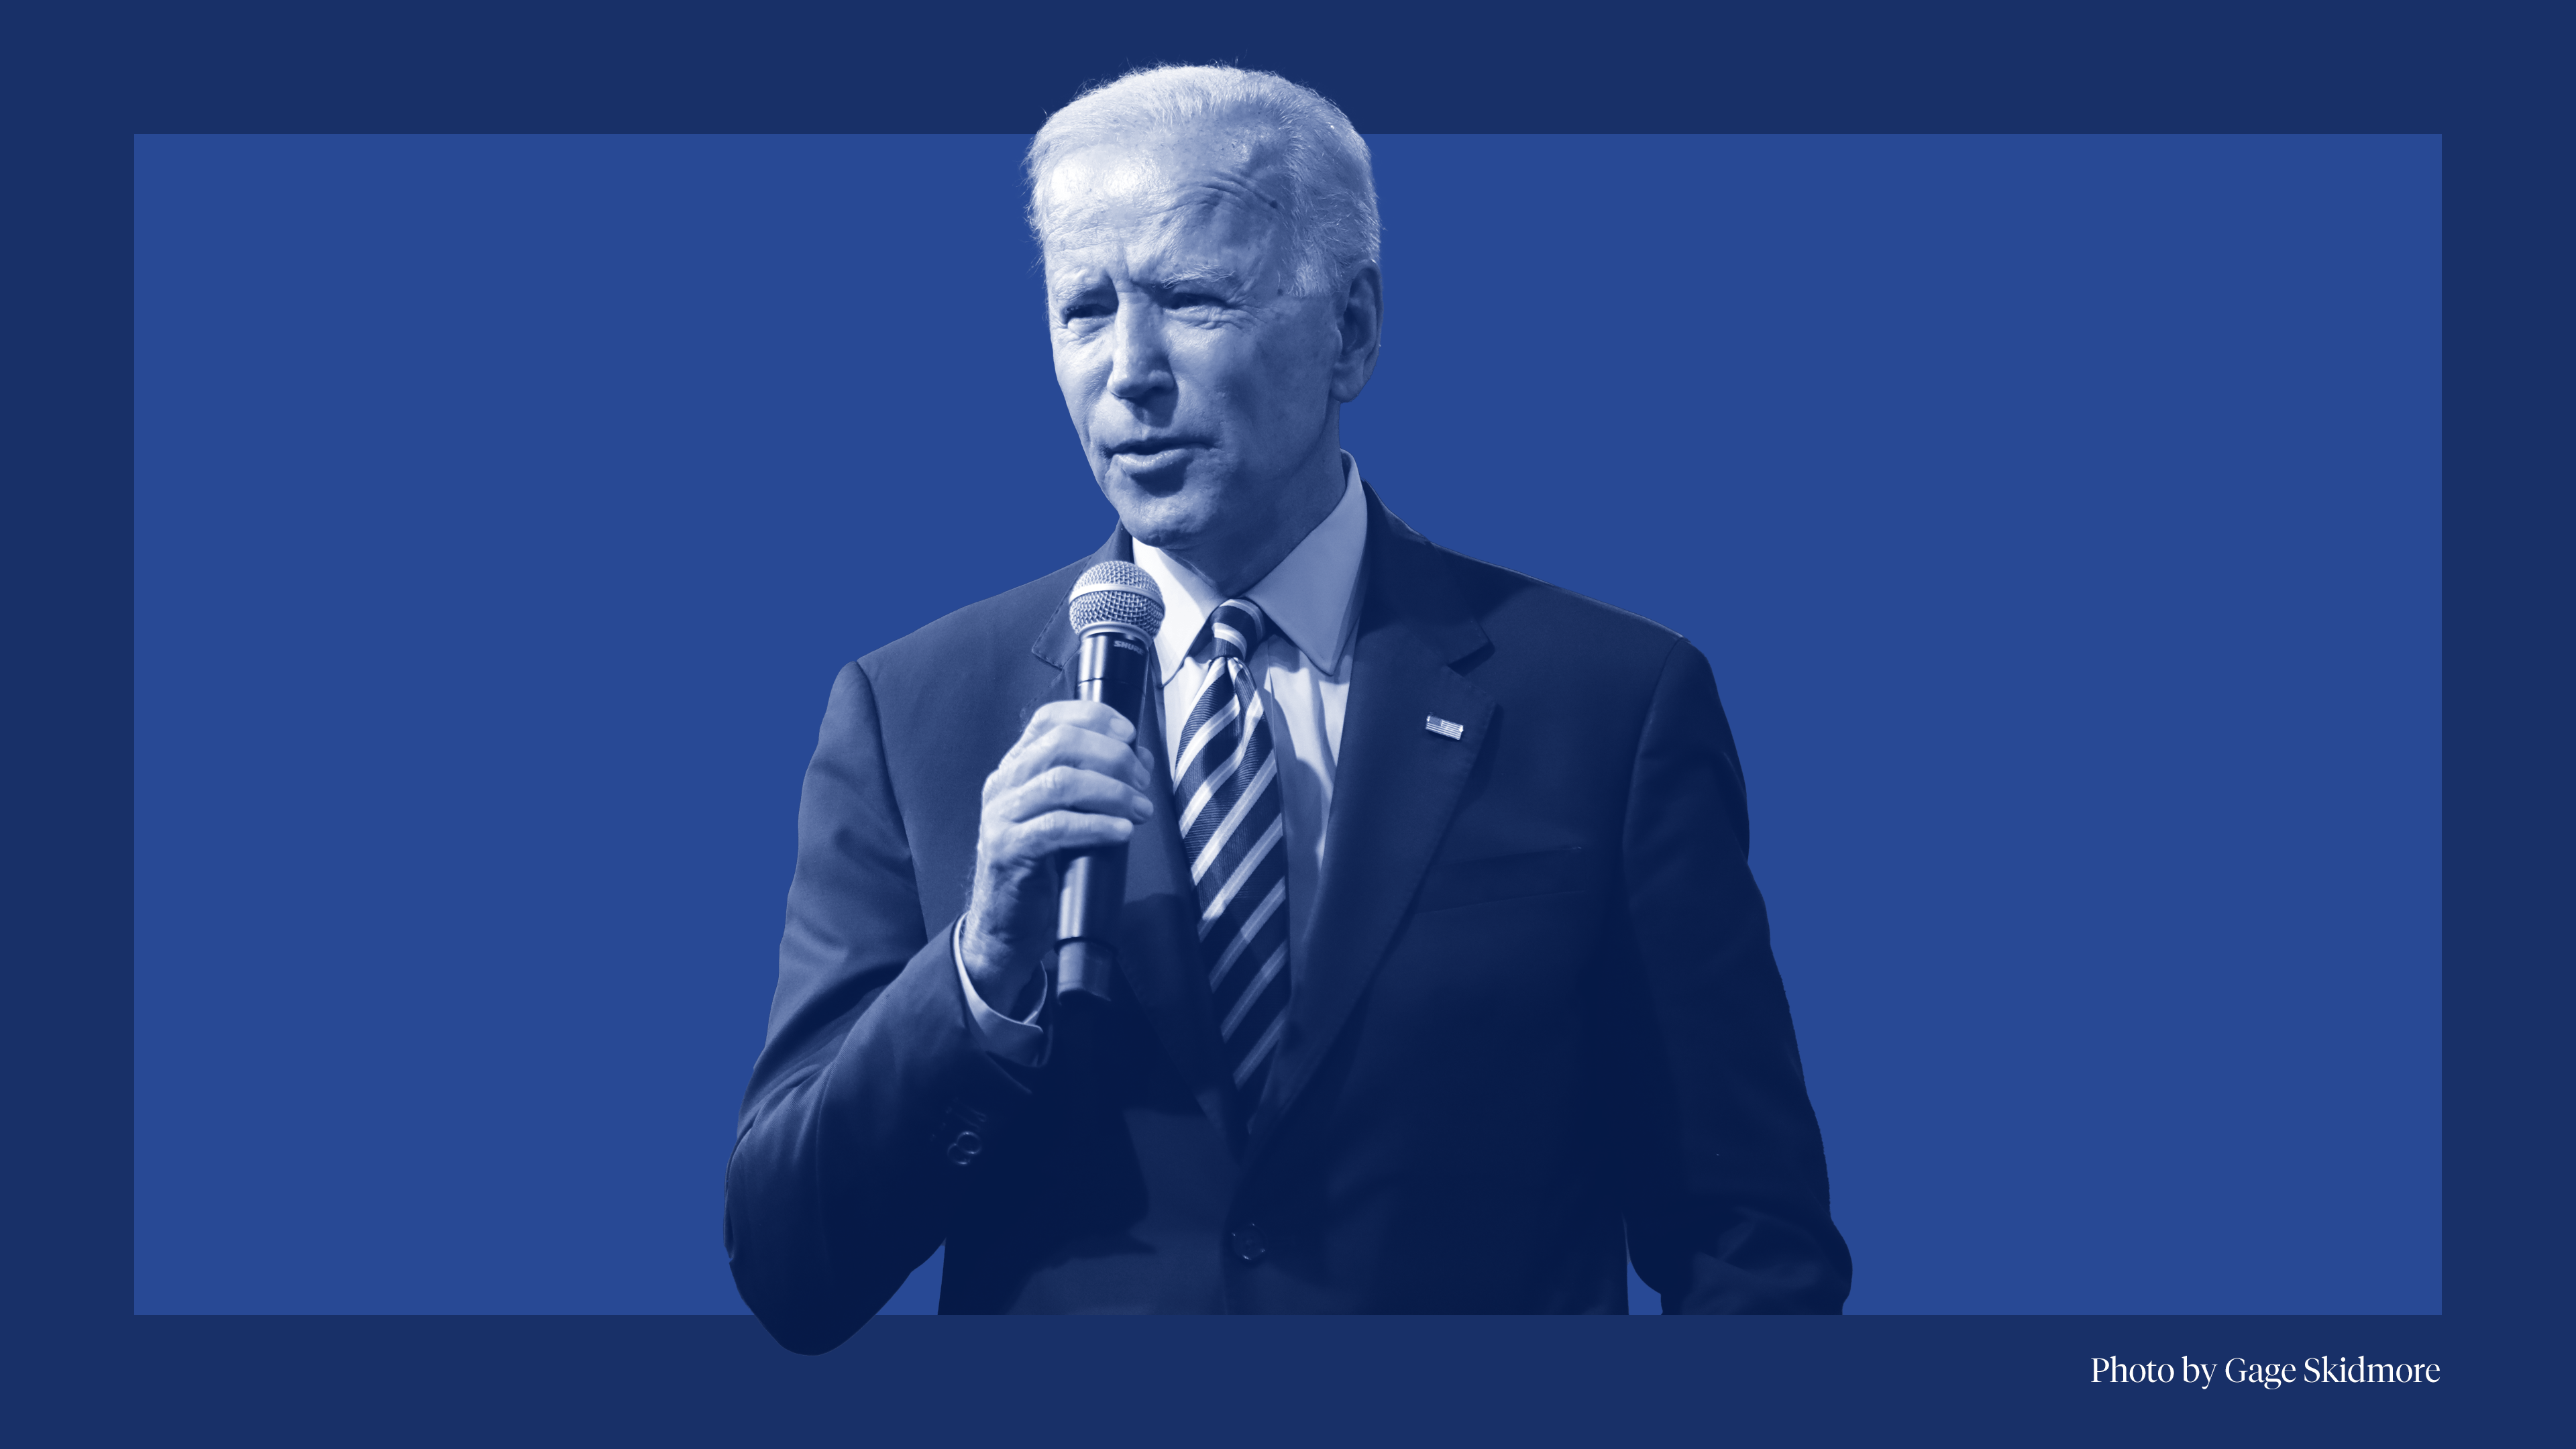 Picture of Joe Biden on a blue background.